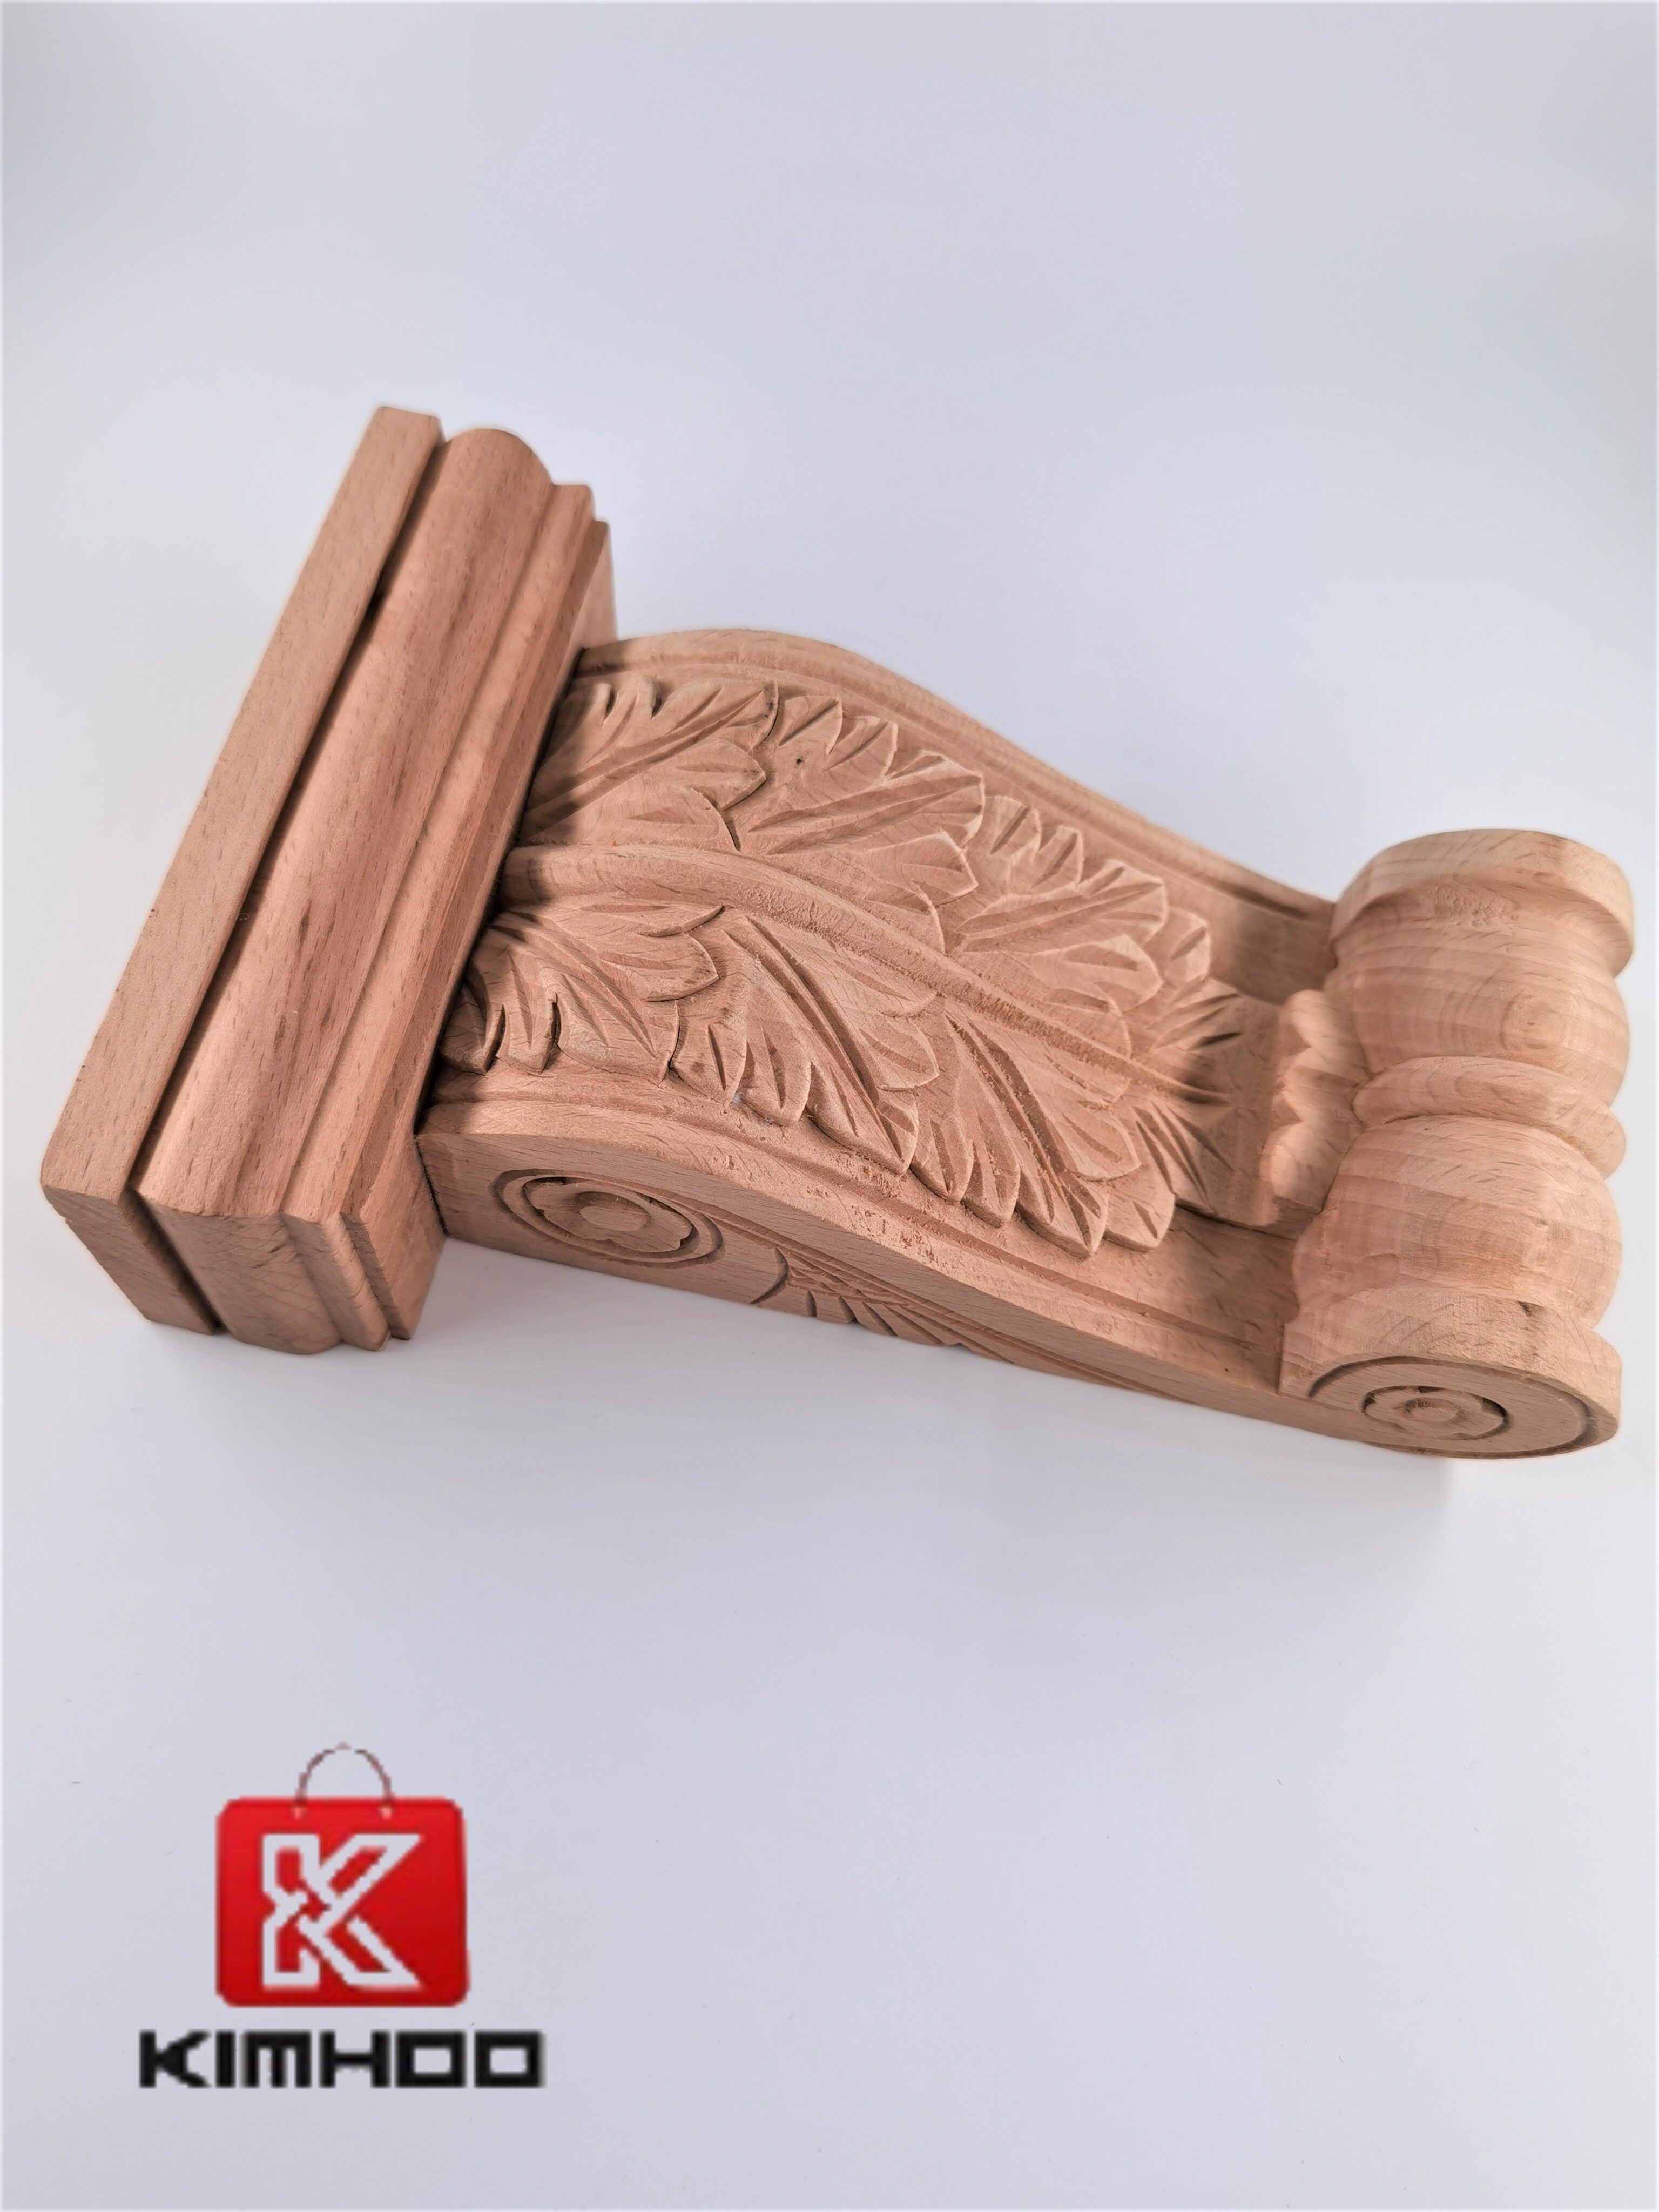 20*5cm/ 30*8cm Wooden Woodcarving Corbel Decal Corner Applique Carved Home Decor